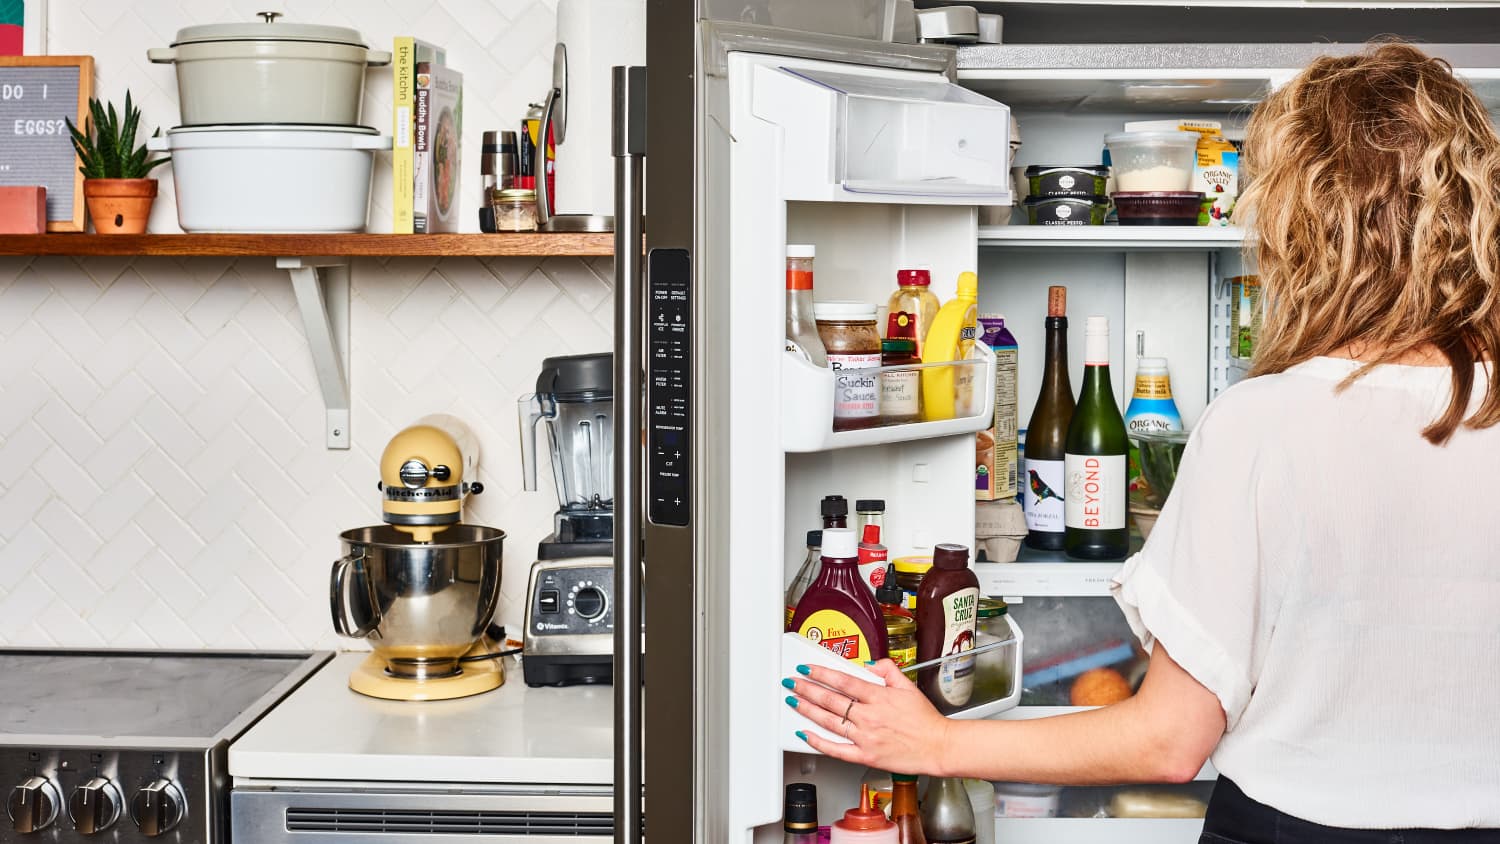 Steps to achieving a professional organizer's fridge